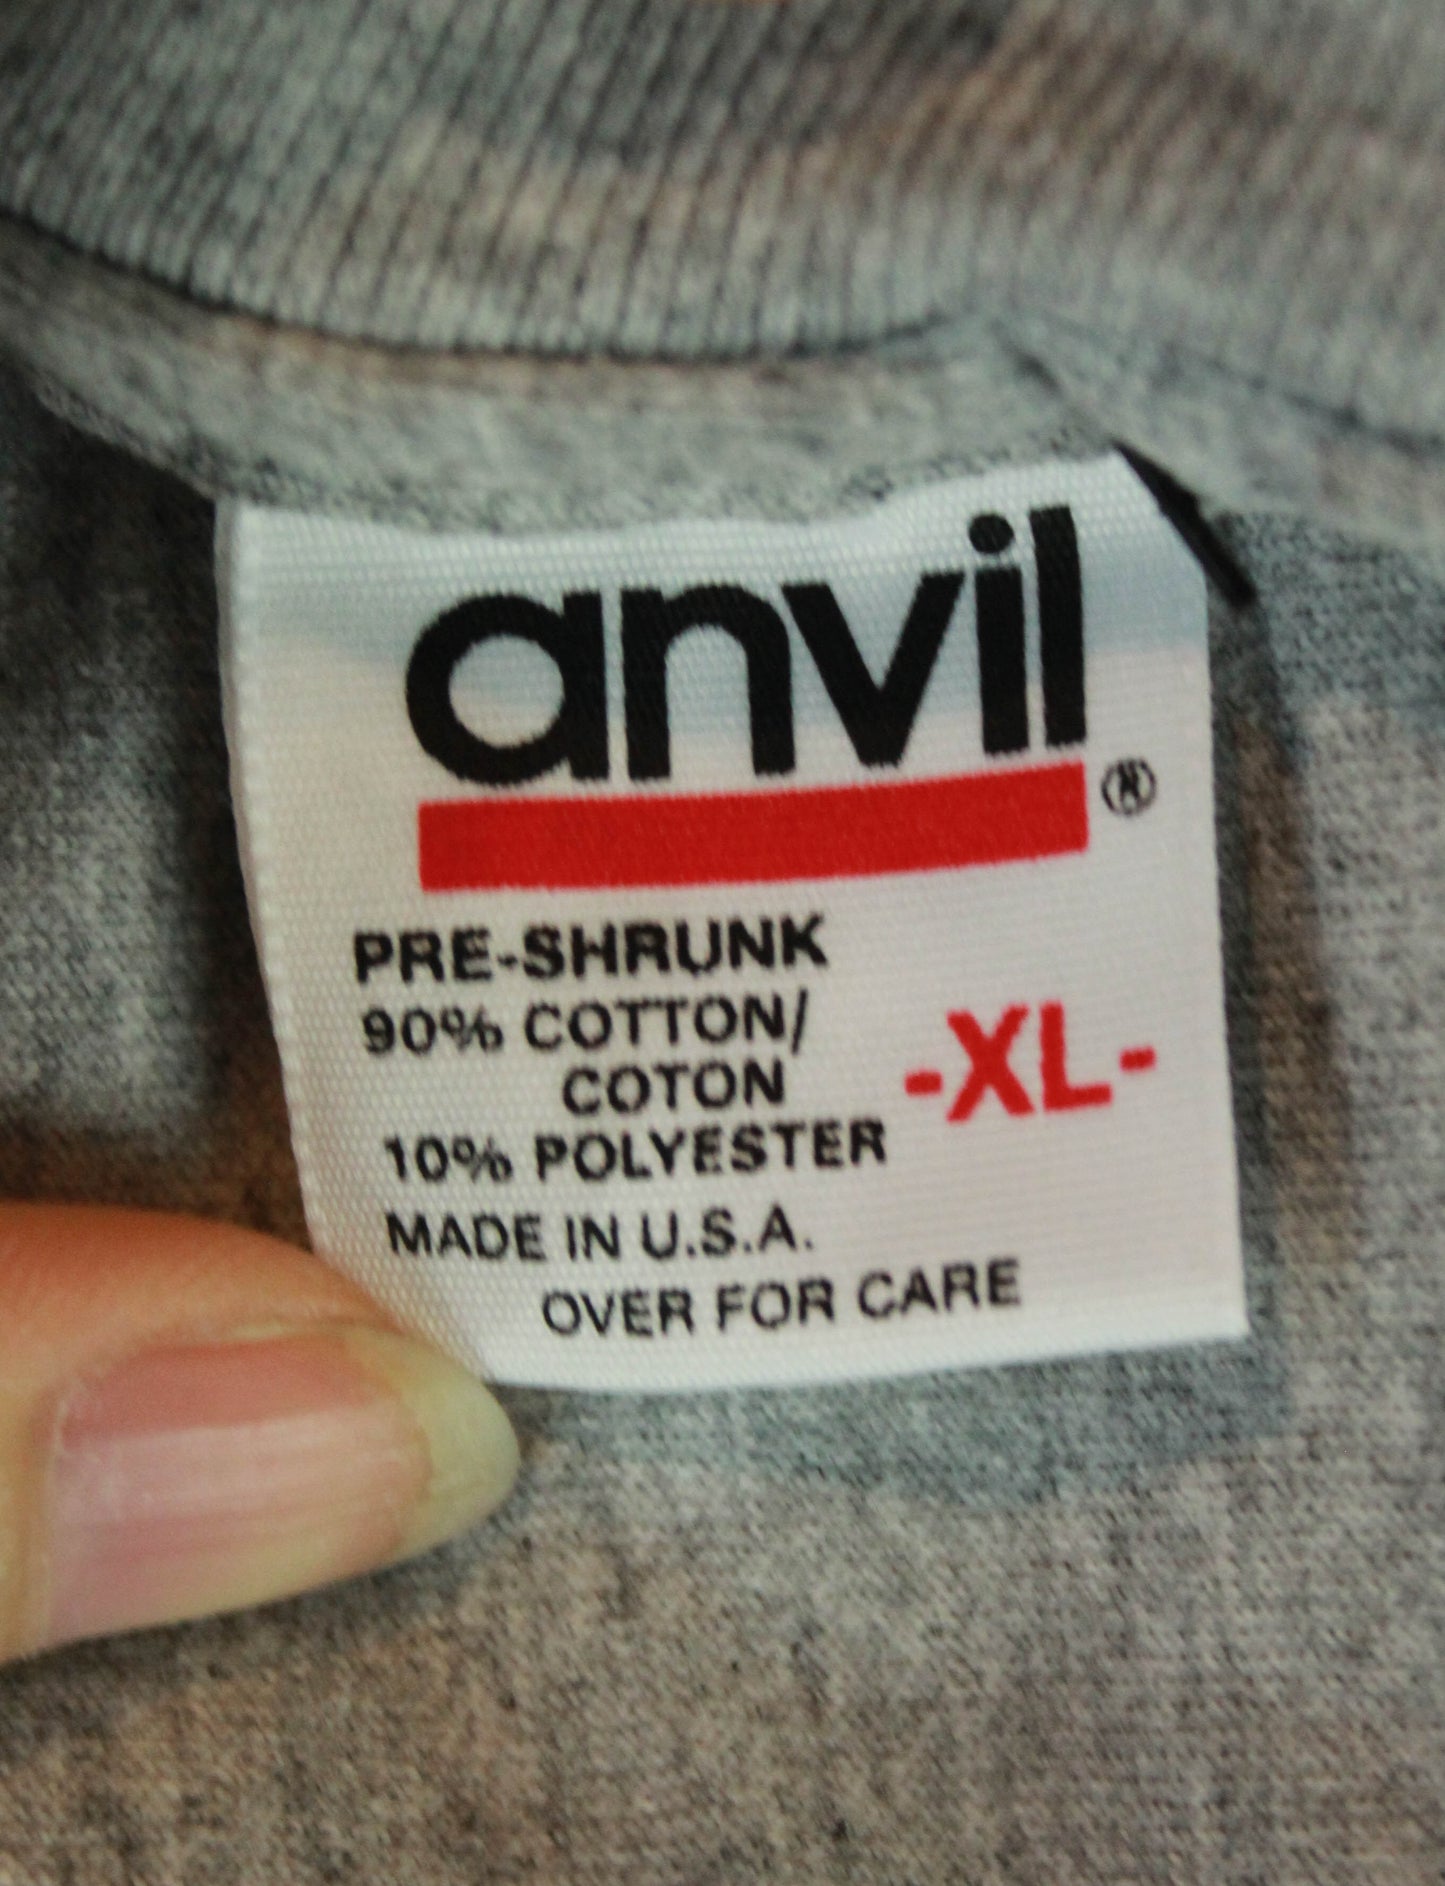 Vintage Tori Amos Concert T Shirt 90's Long Sleeve - XL